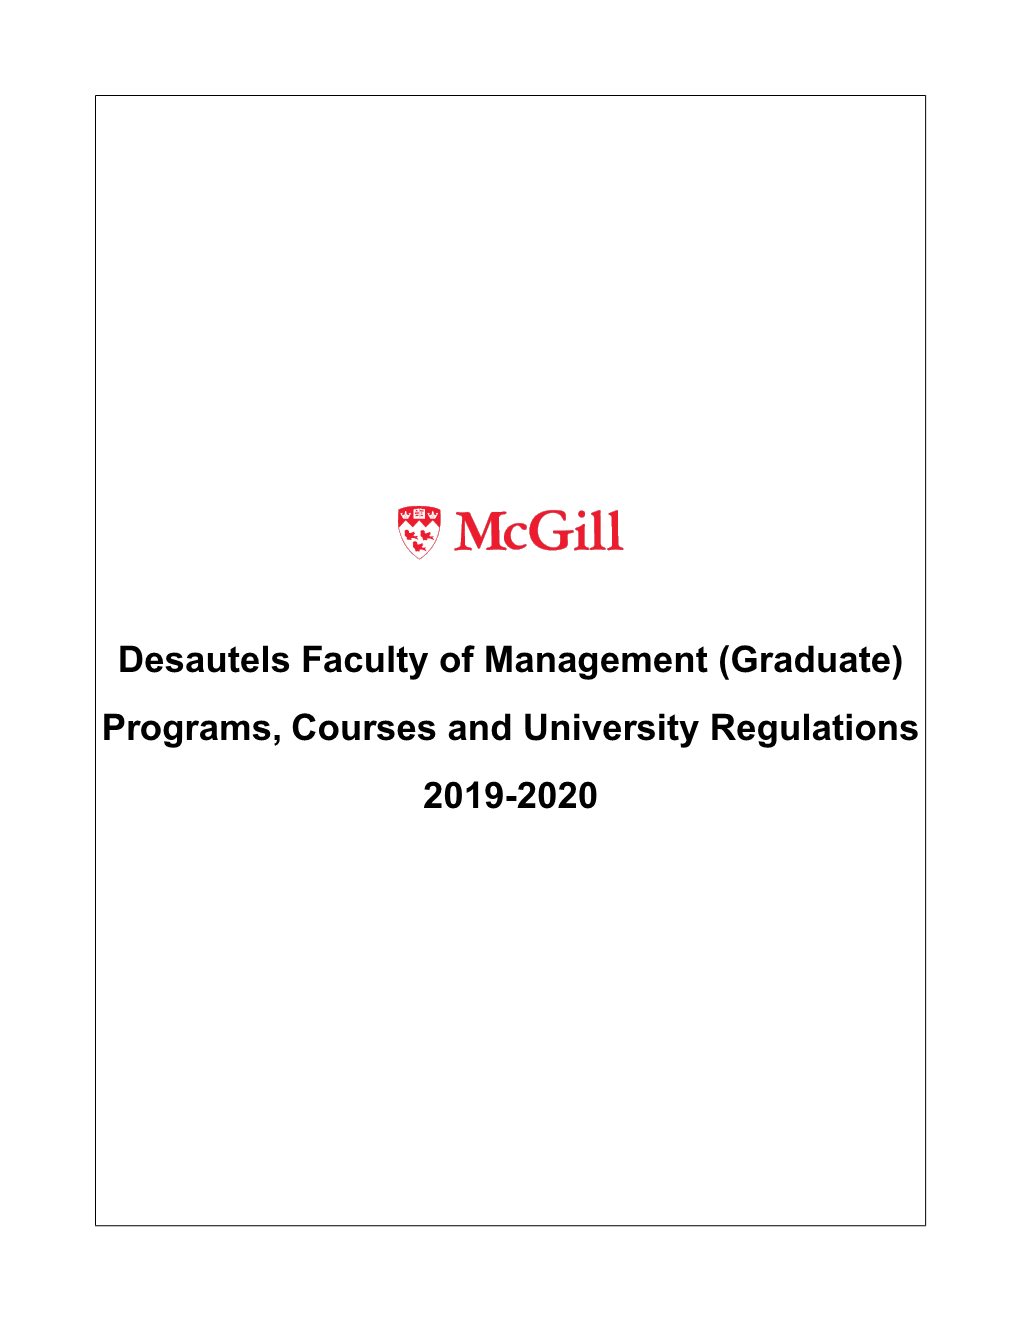 Desautels Faculty of Management (Graduate) Programs, Courses and University Regulations 2019-2020